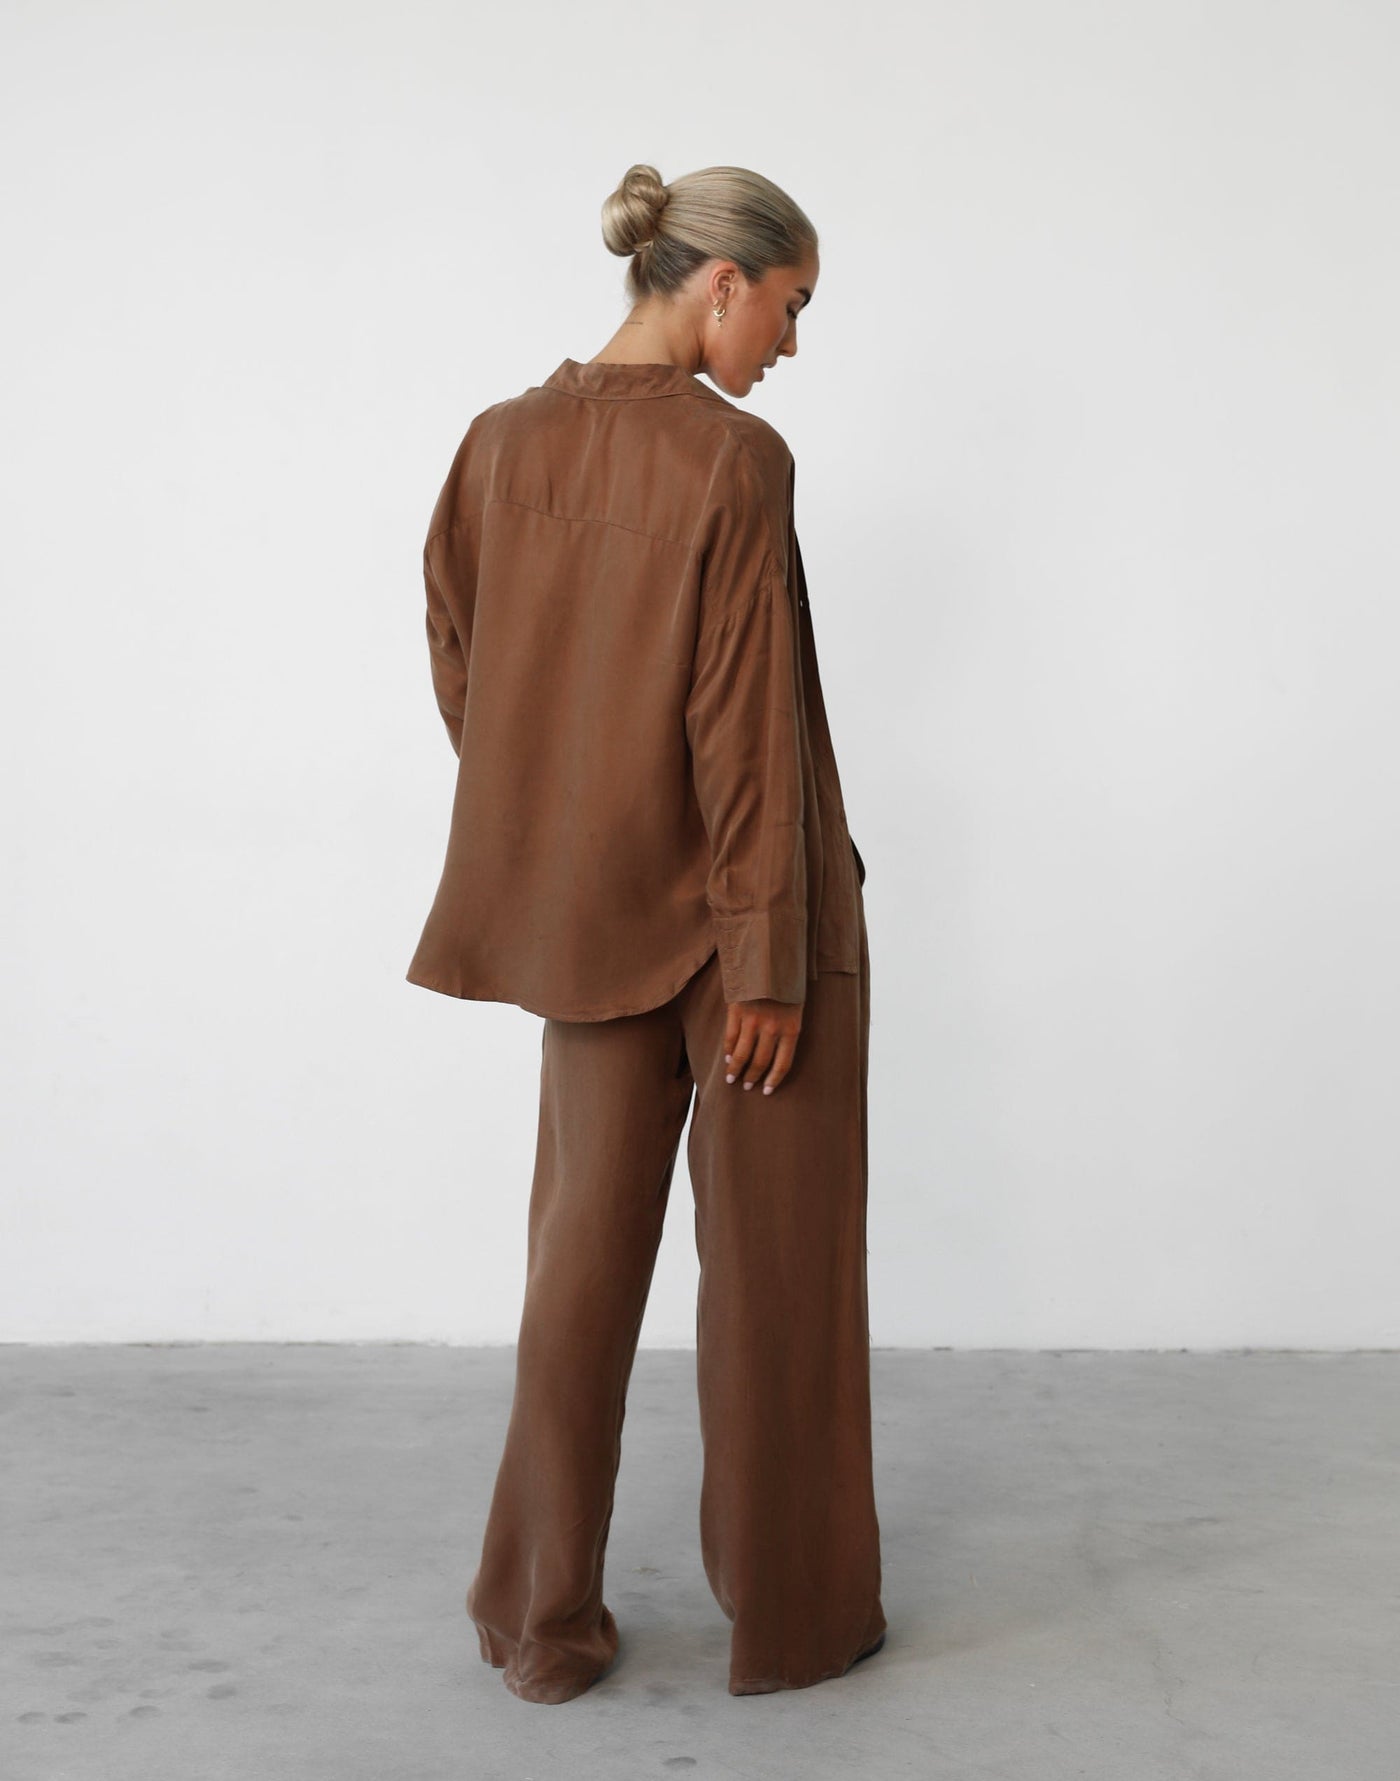 Ranna Long Sleeve Shirt (Mocha) - Button Up Relaxed Fit Shirt - Women's Top - Charcoal Clothing